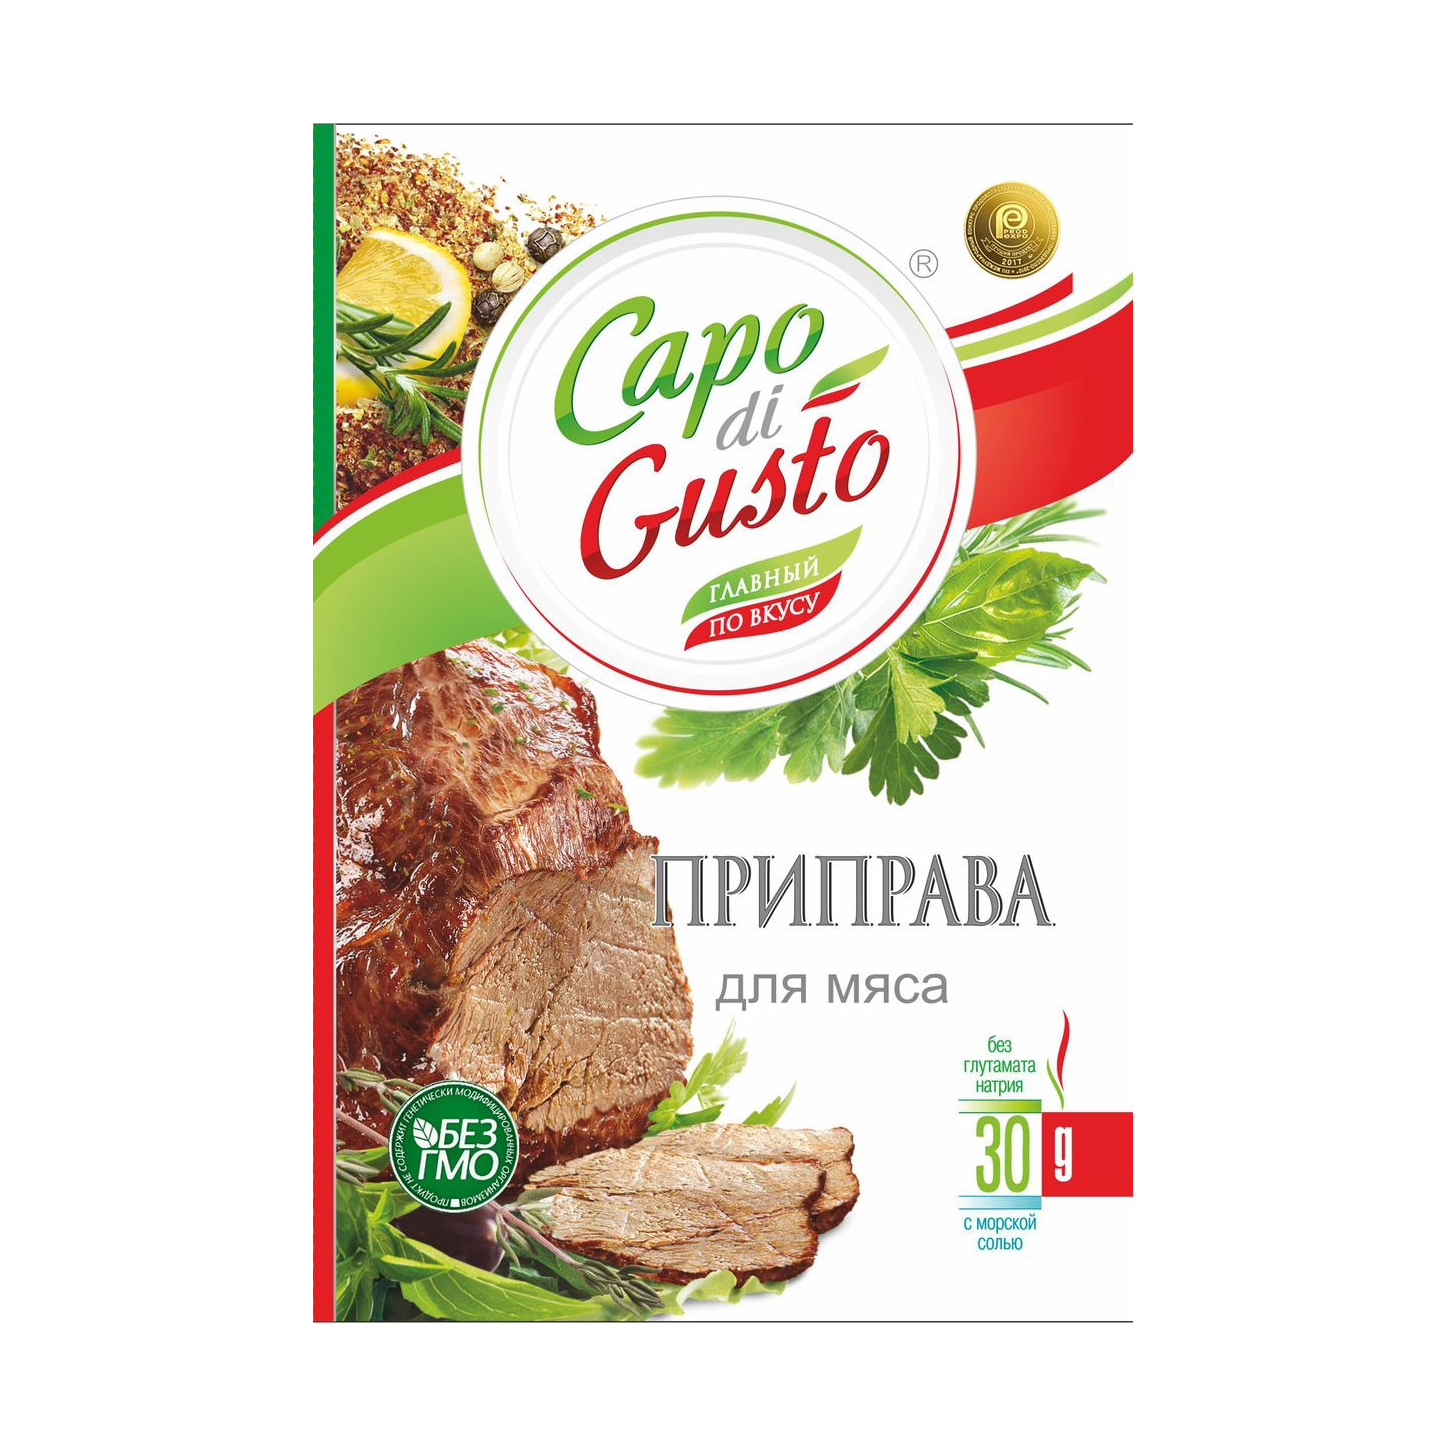 приправа европа 150 г для мяса пл б Приправа Capo di Gusto для мяса 30 г